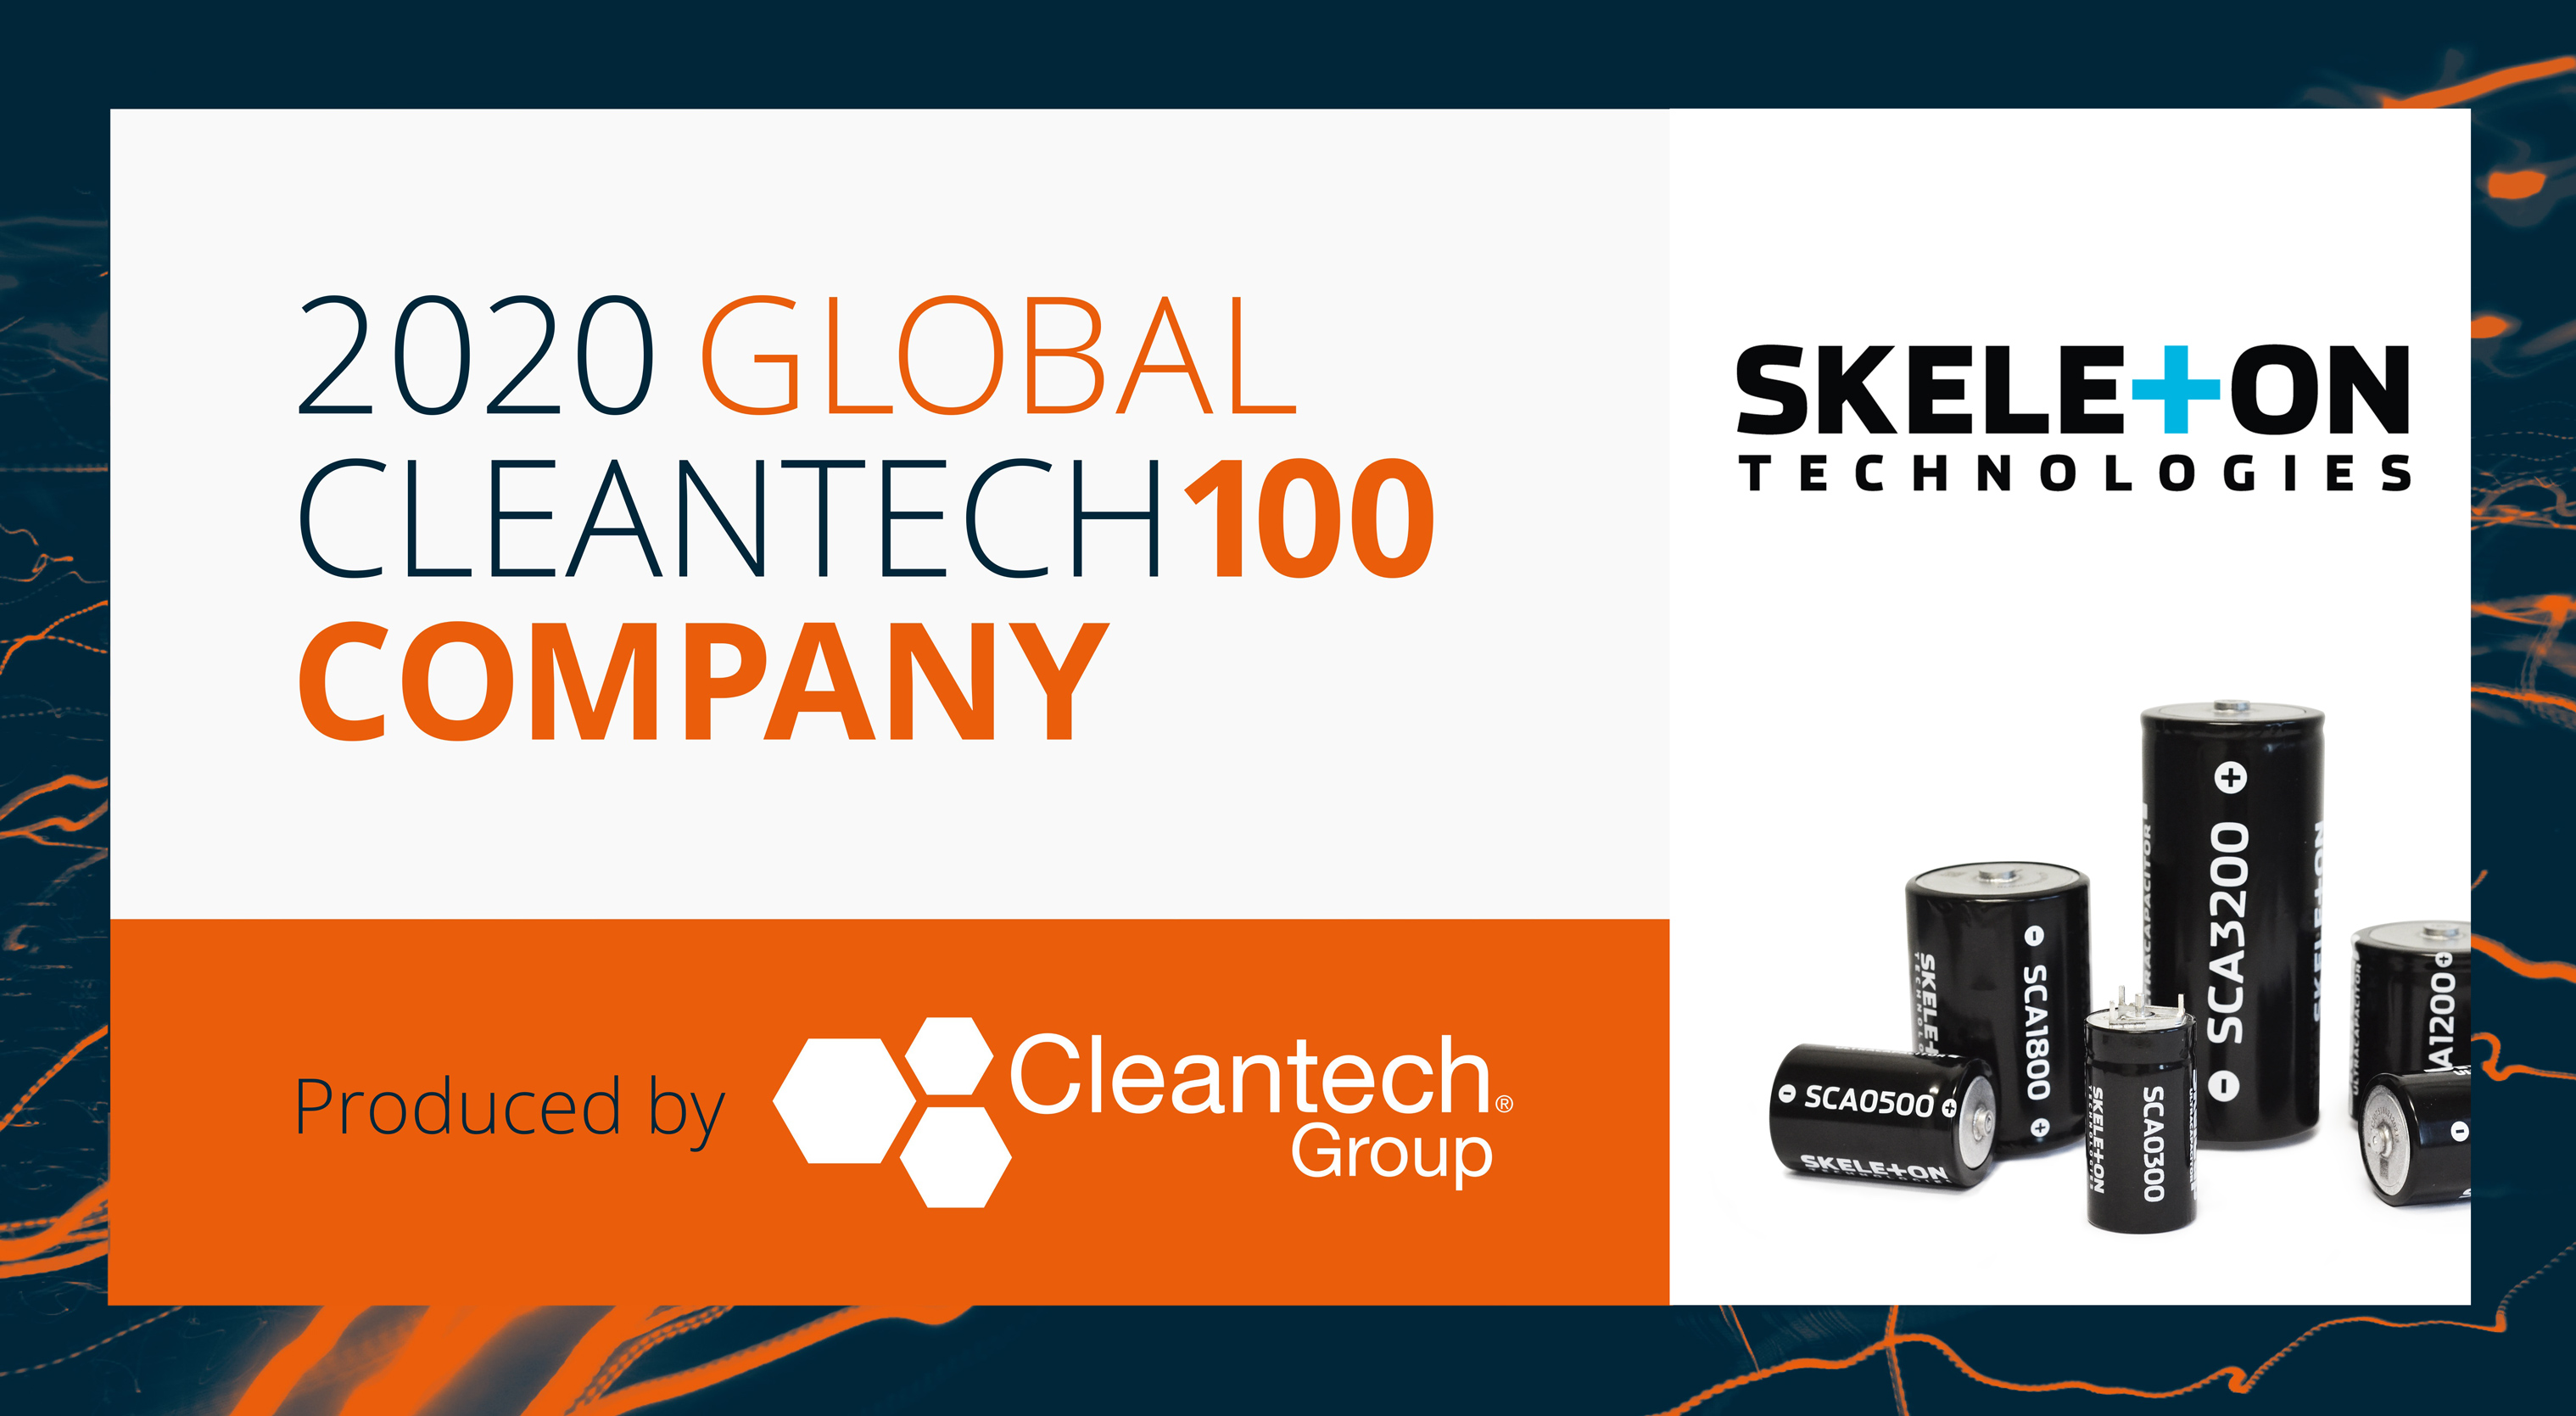 Global Cleantech 100 - Skeleton 2020